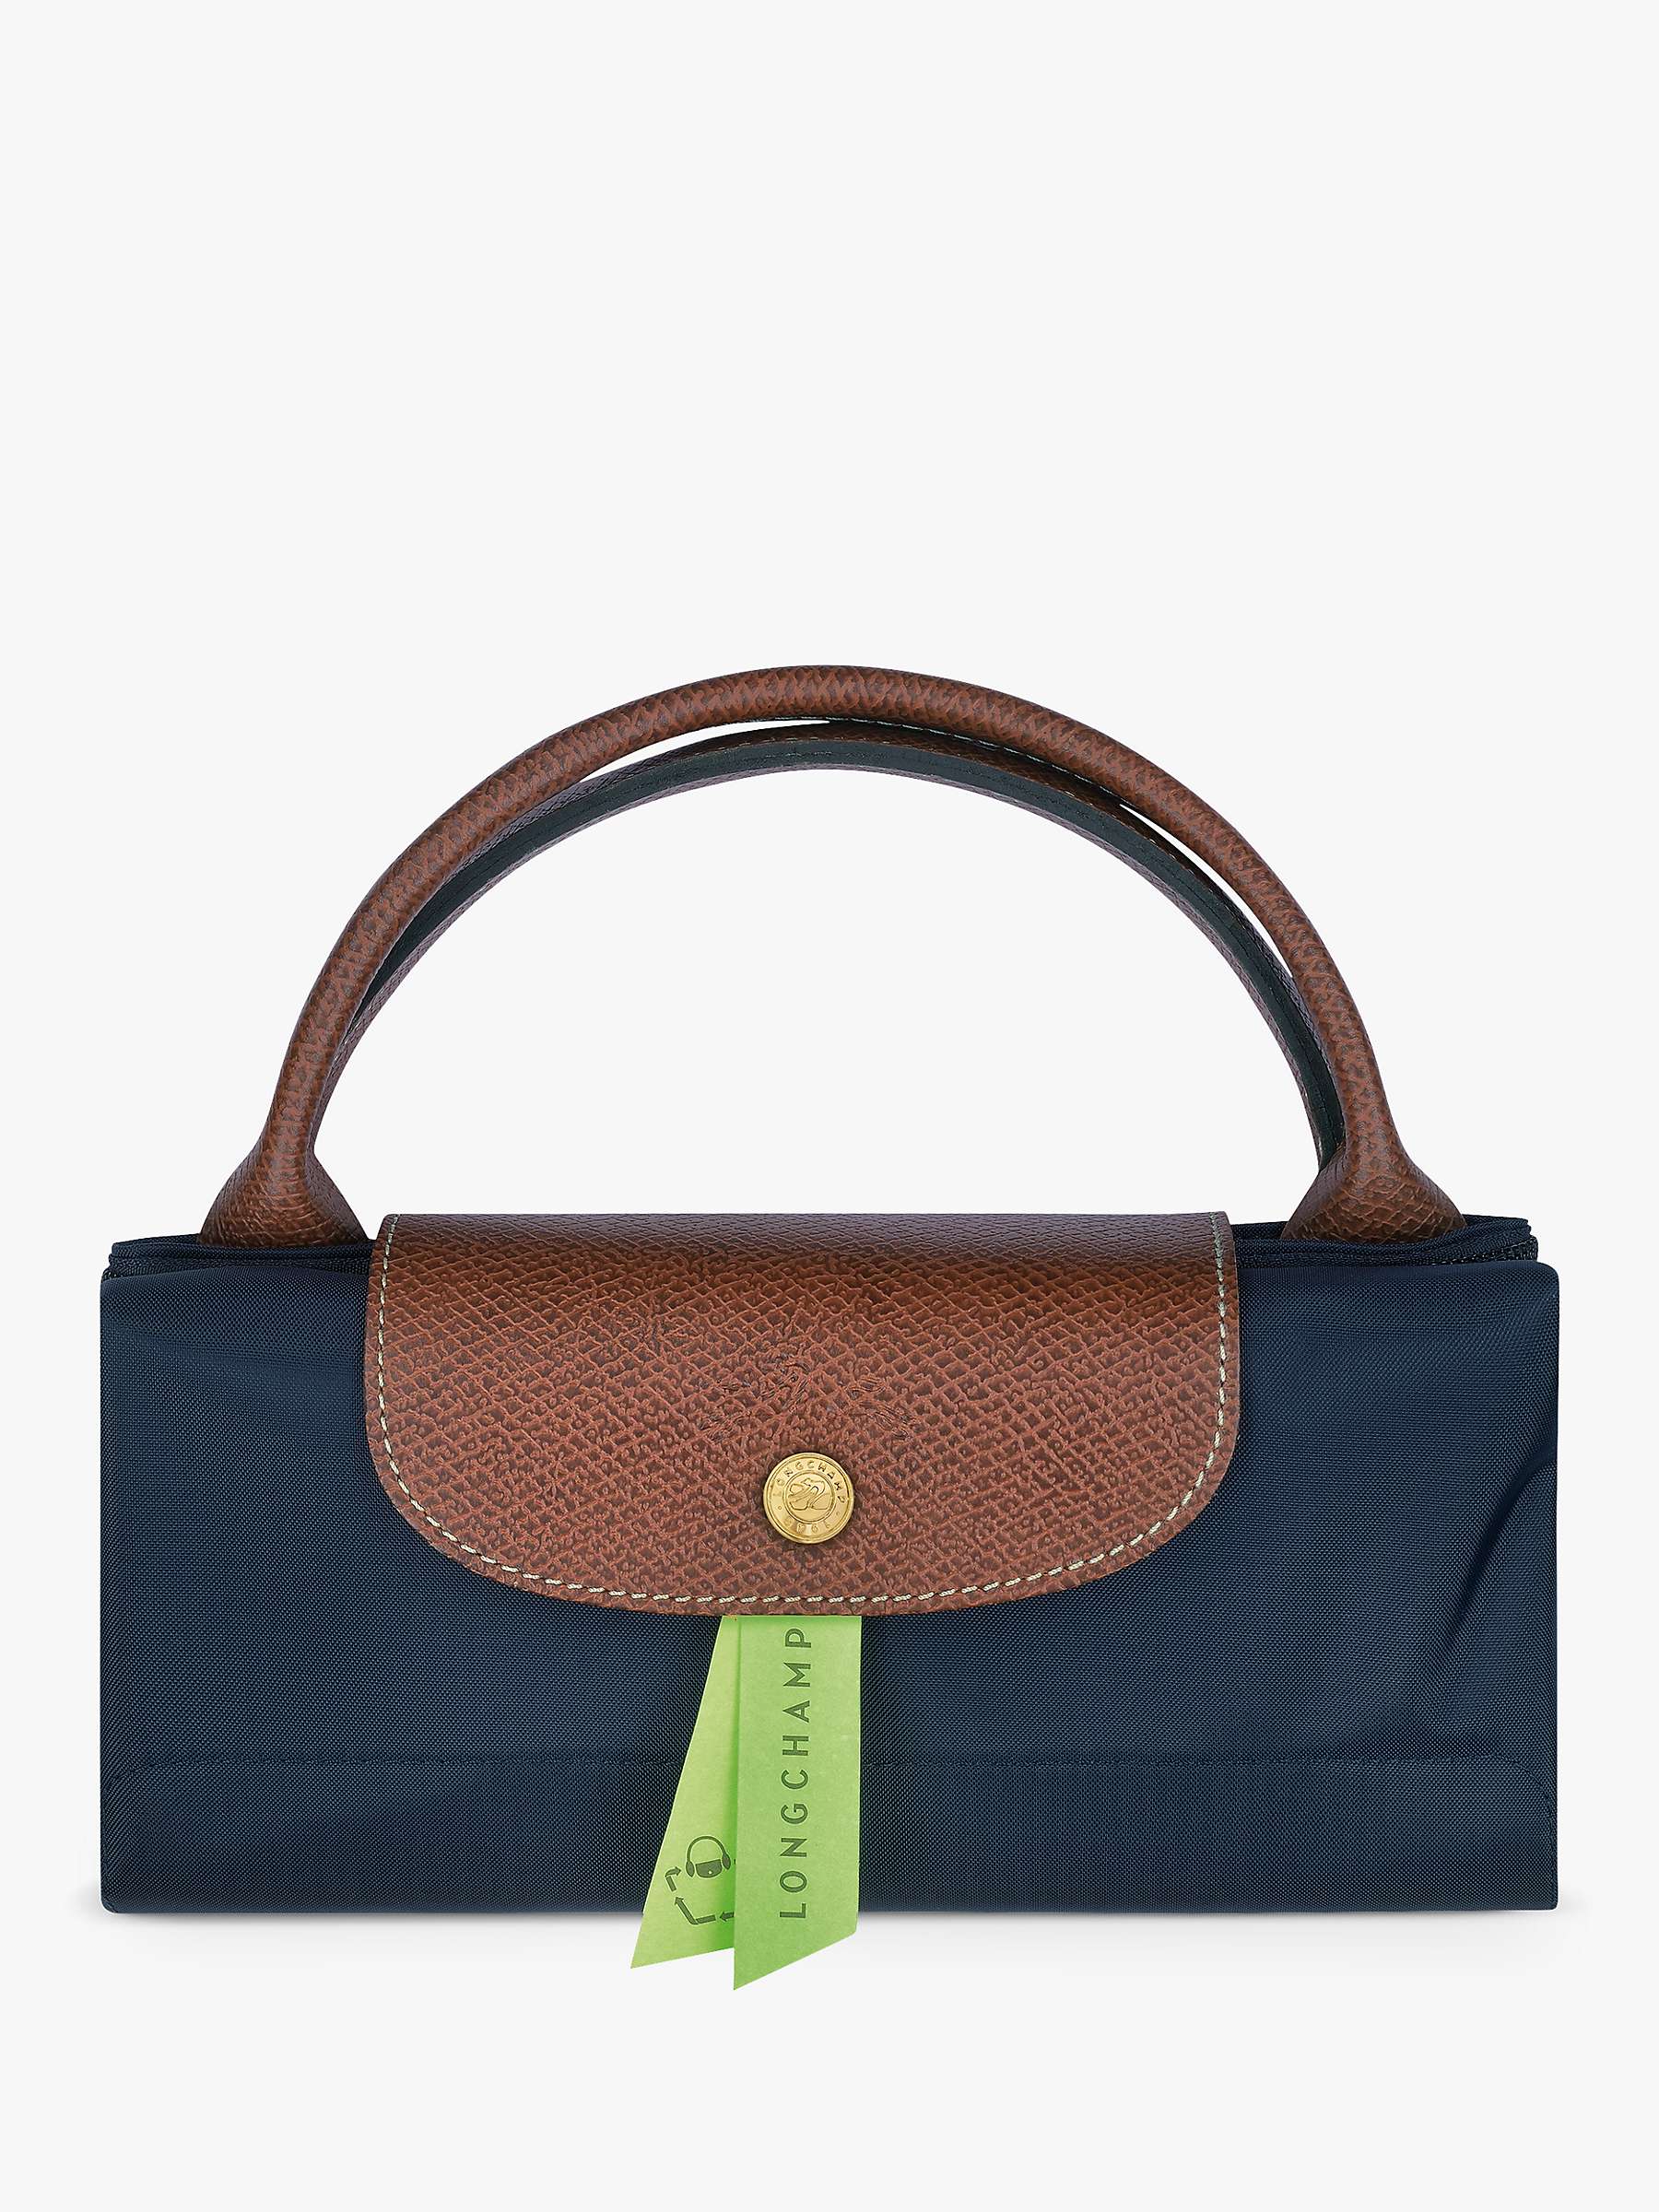 Buy Longchamp Le Pliage Original Small Travel Bag Online at johnlewis.com